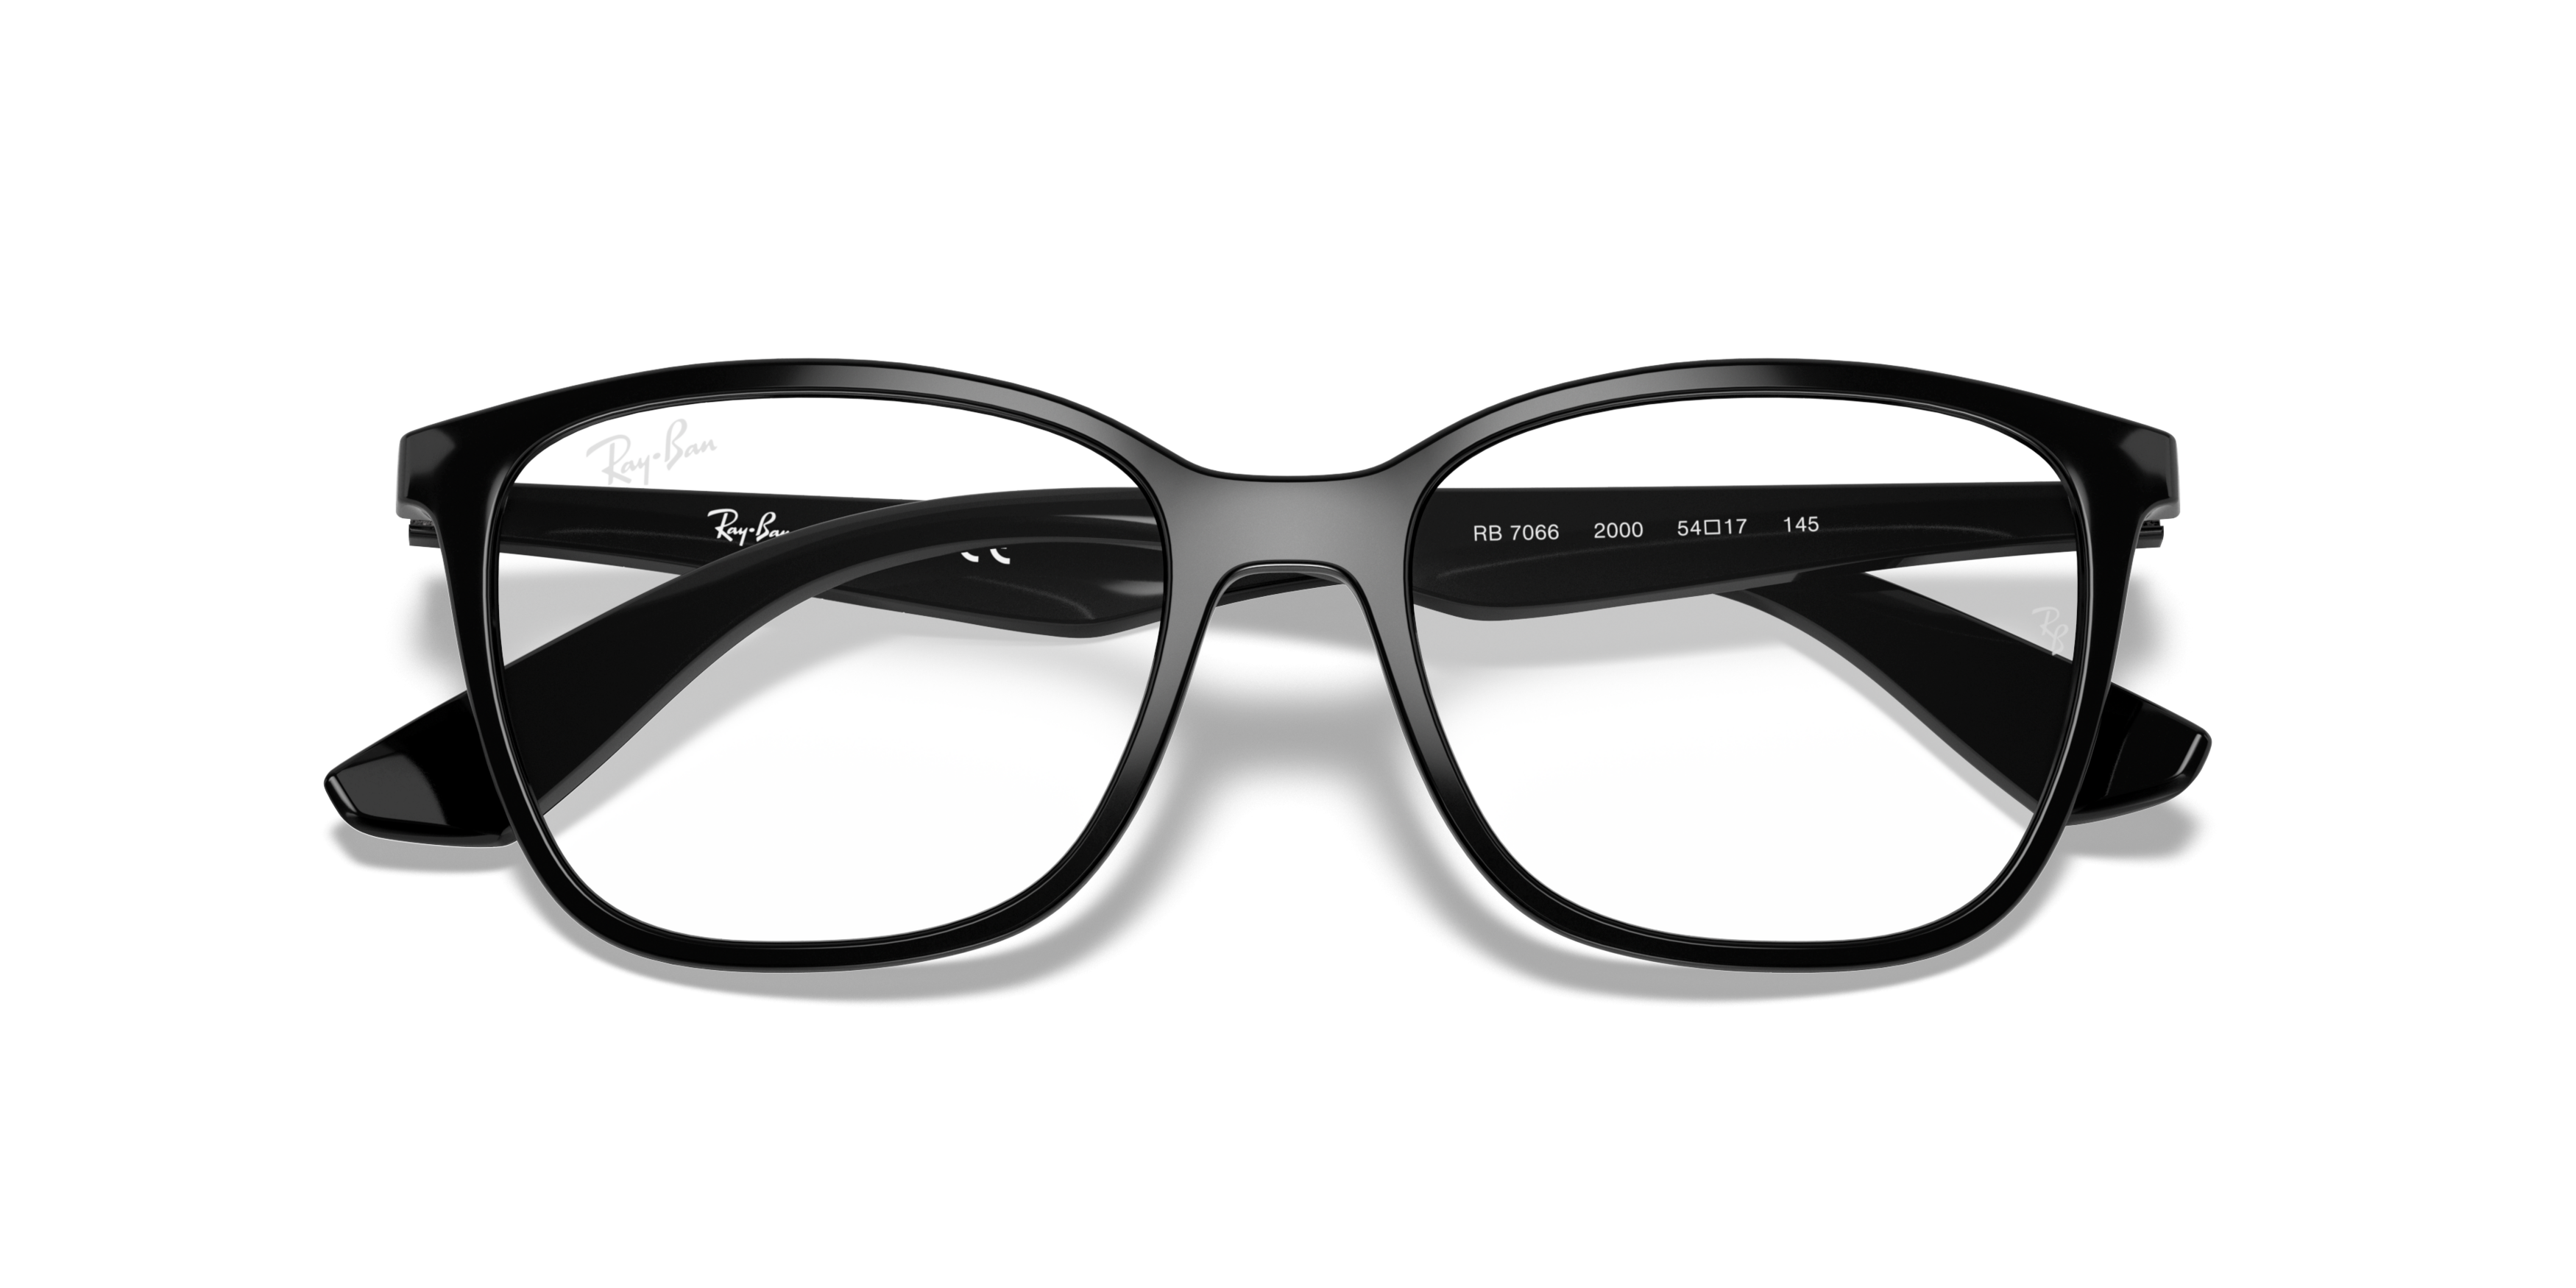 Folded Ray-Ban RX 7066 (2000) Glasses Transparent / Black